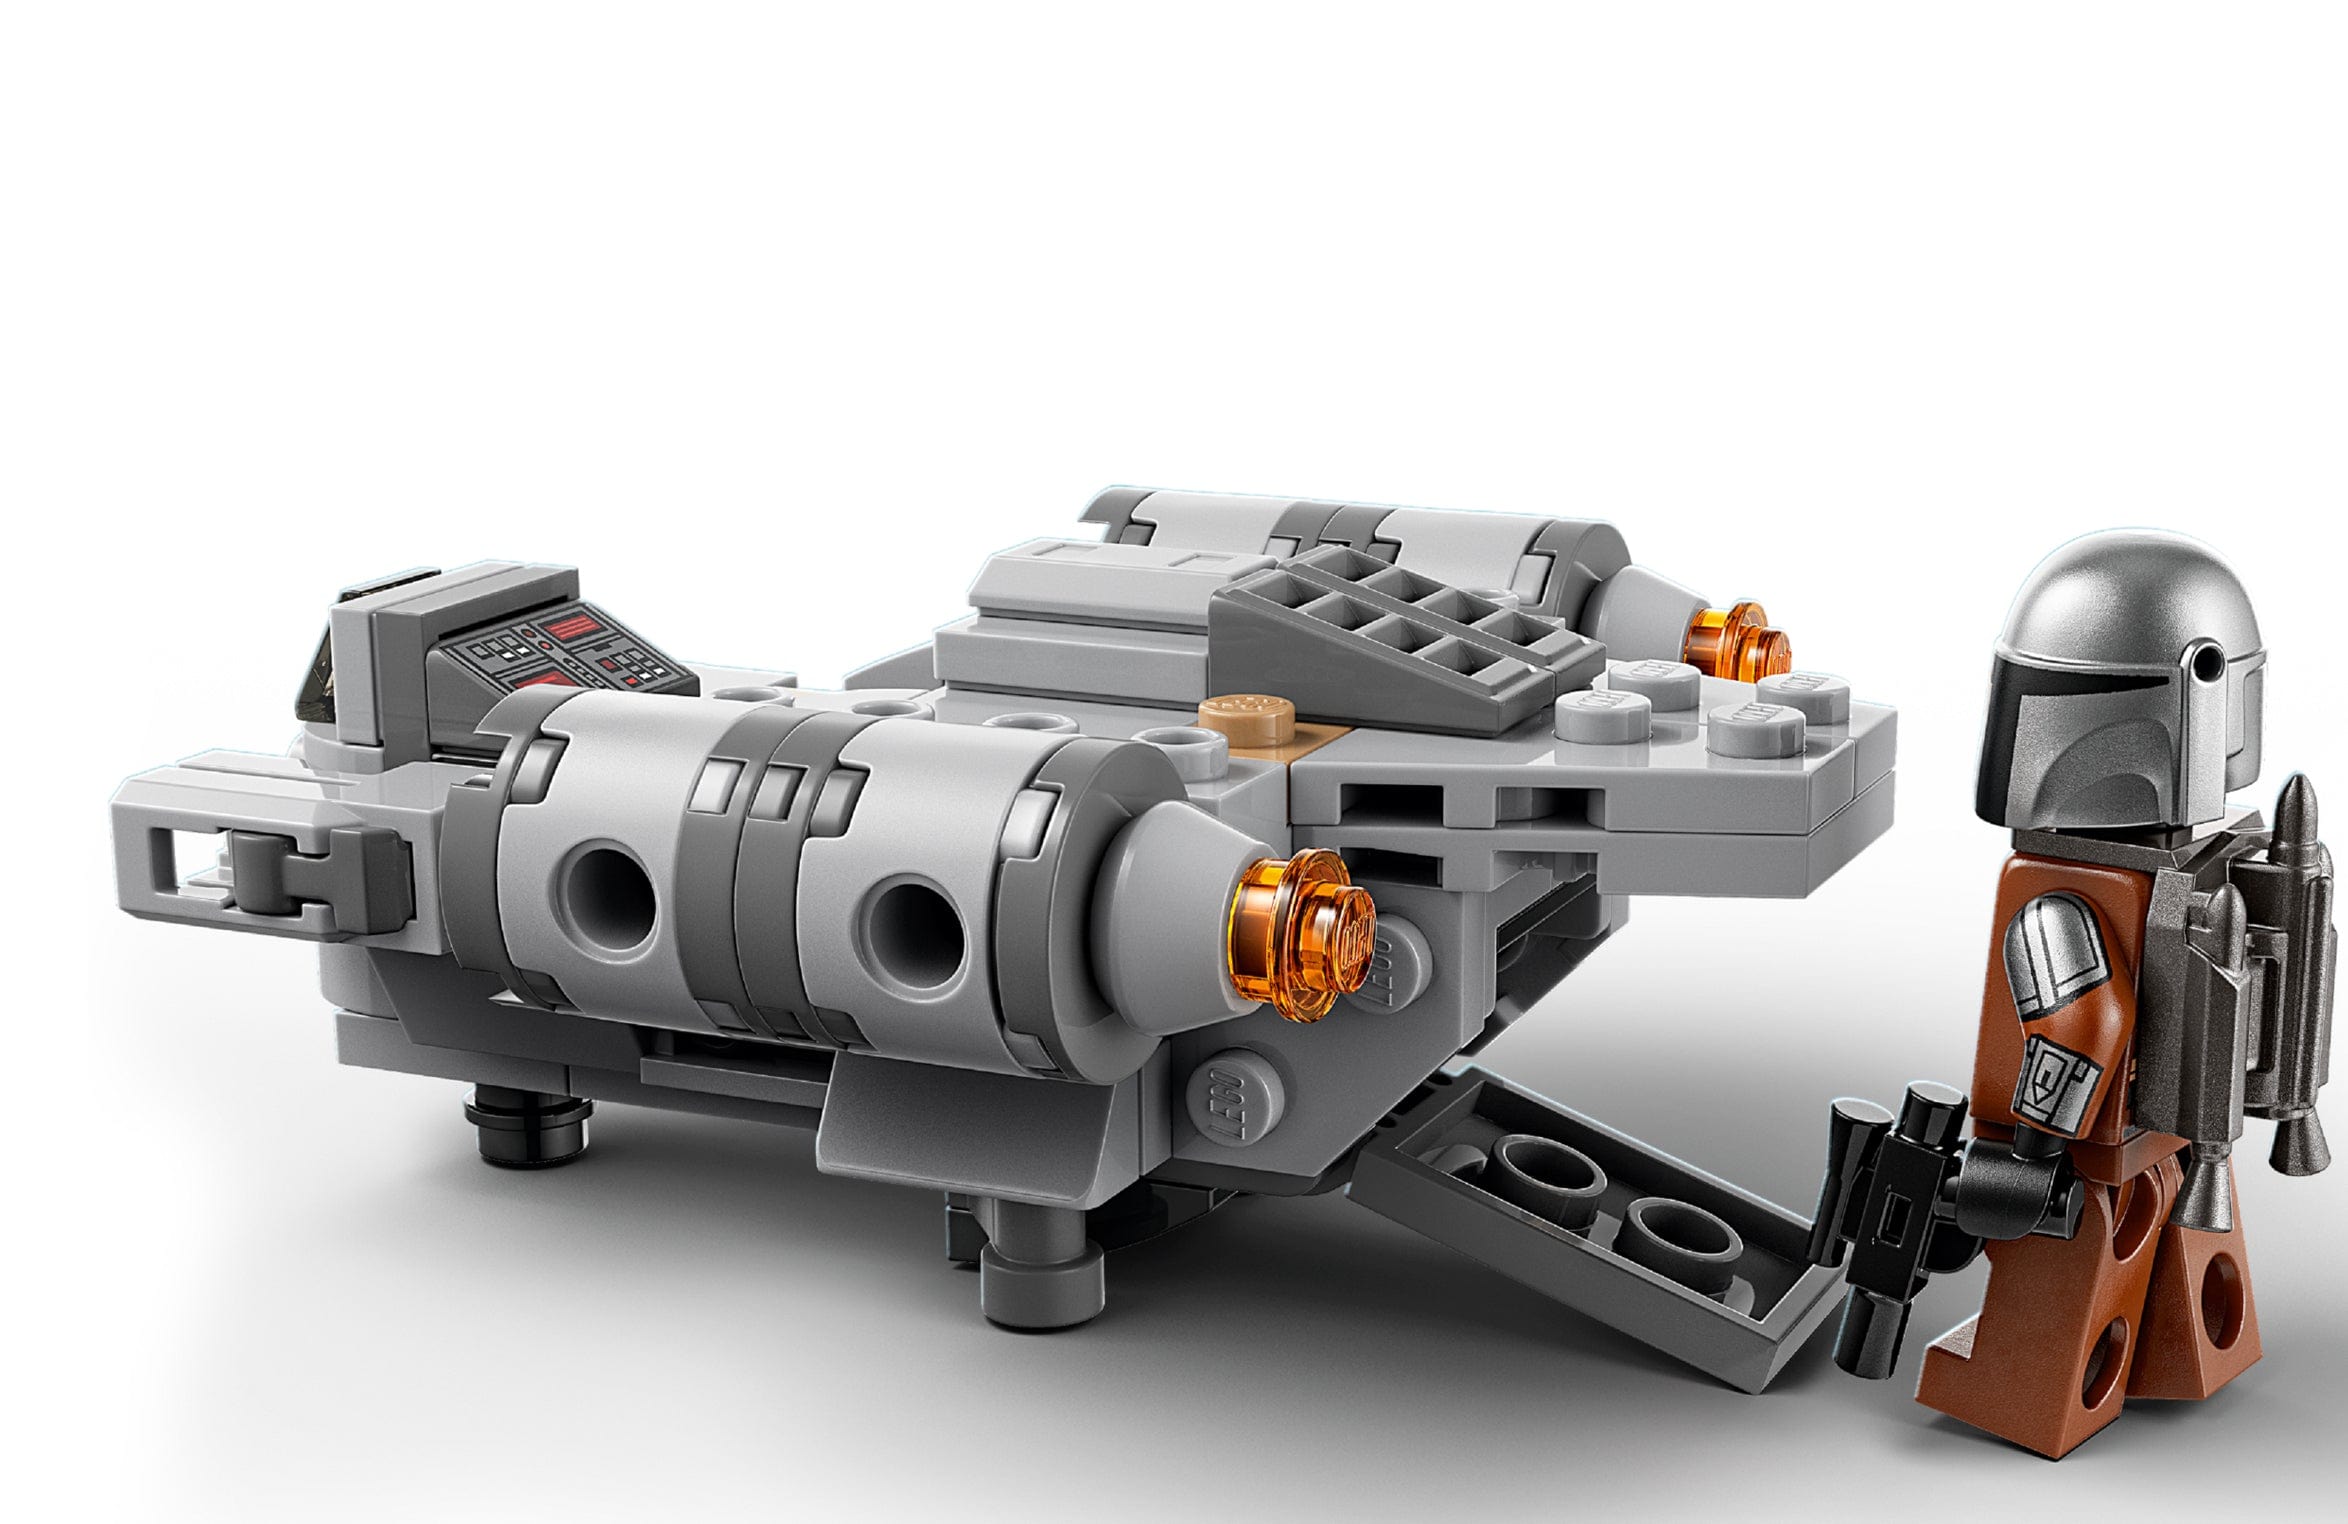 LEGO® Star Wars 75321 the Razor Crest™ Microfighter